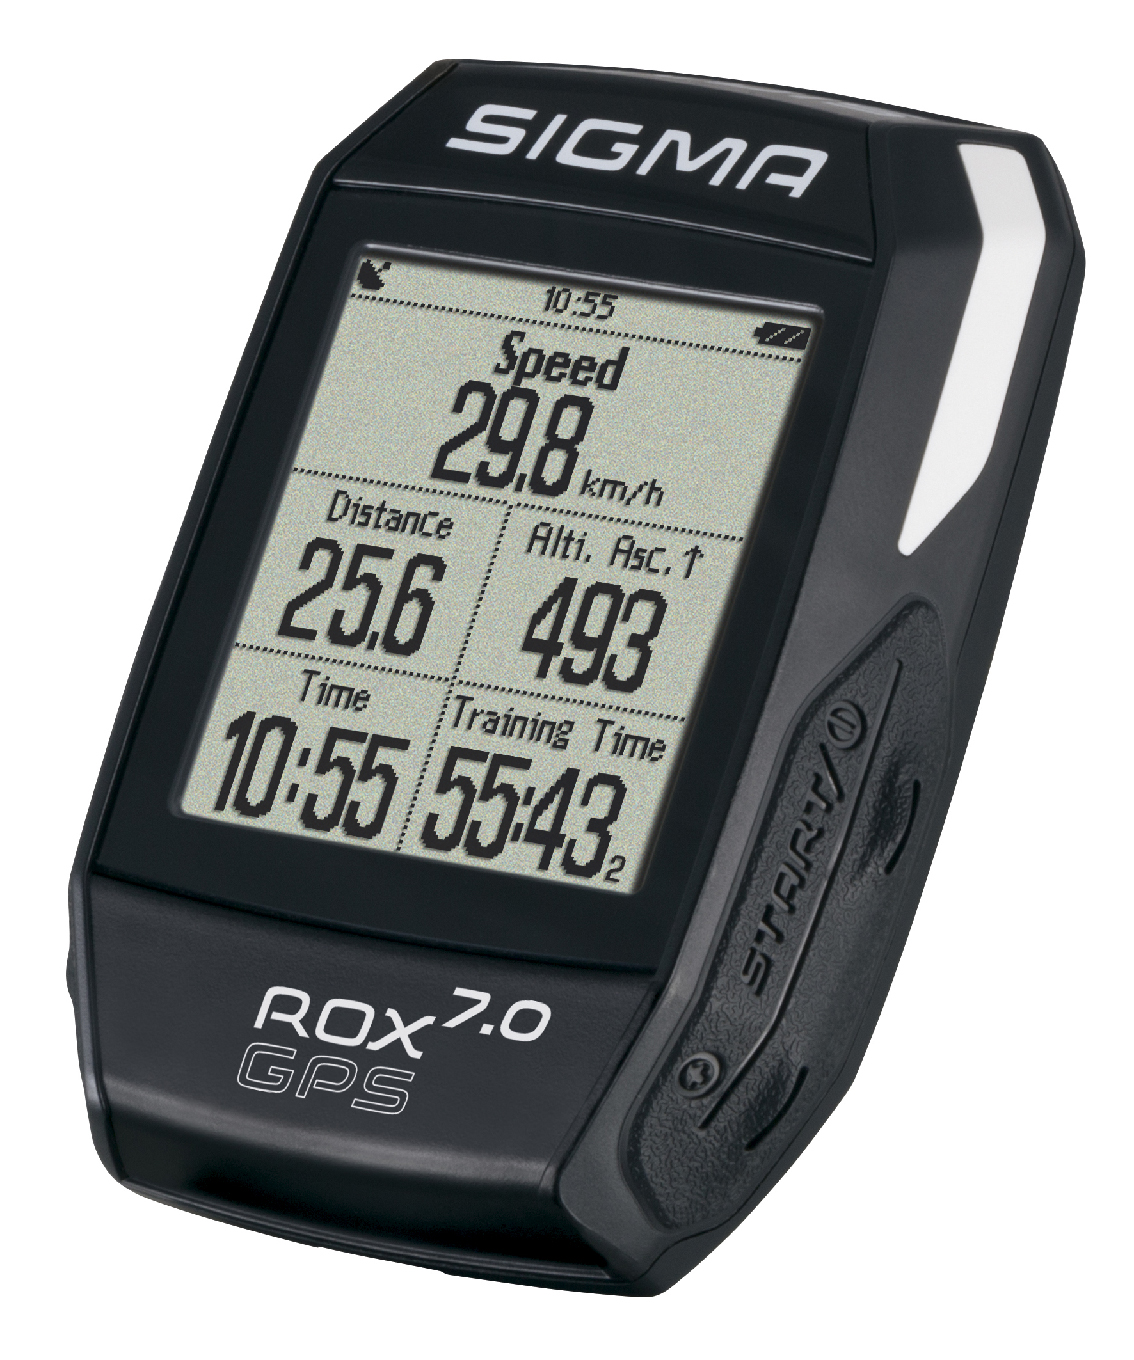 Sigma ROX GPS 7.0 - A&B - Springfield, MO